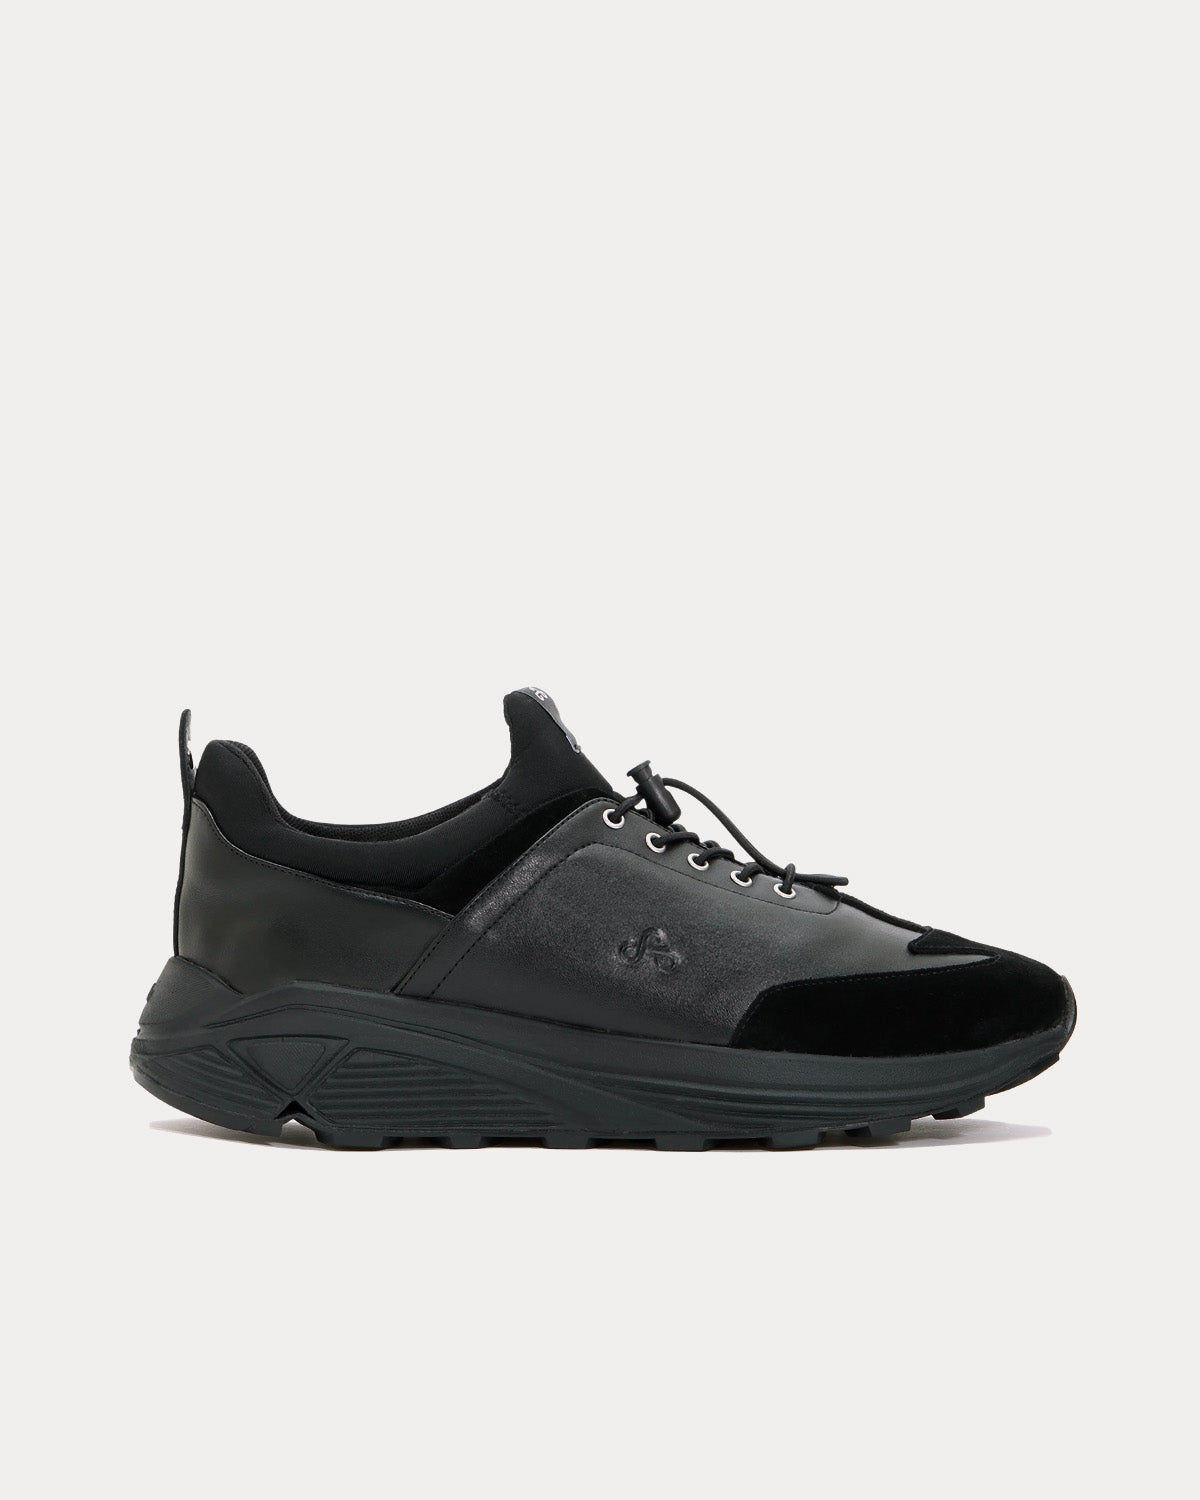 OAO - Mona Black Low Top Sneakers